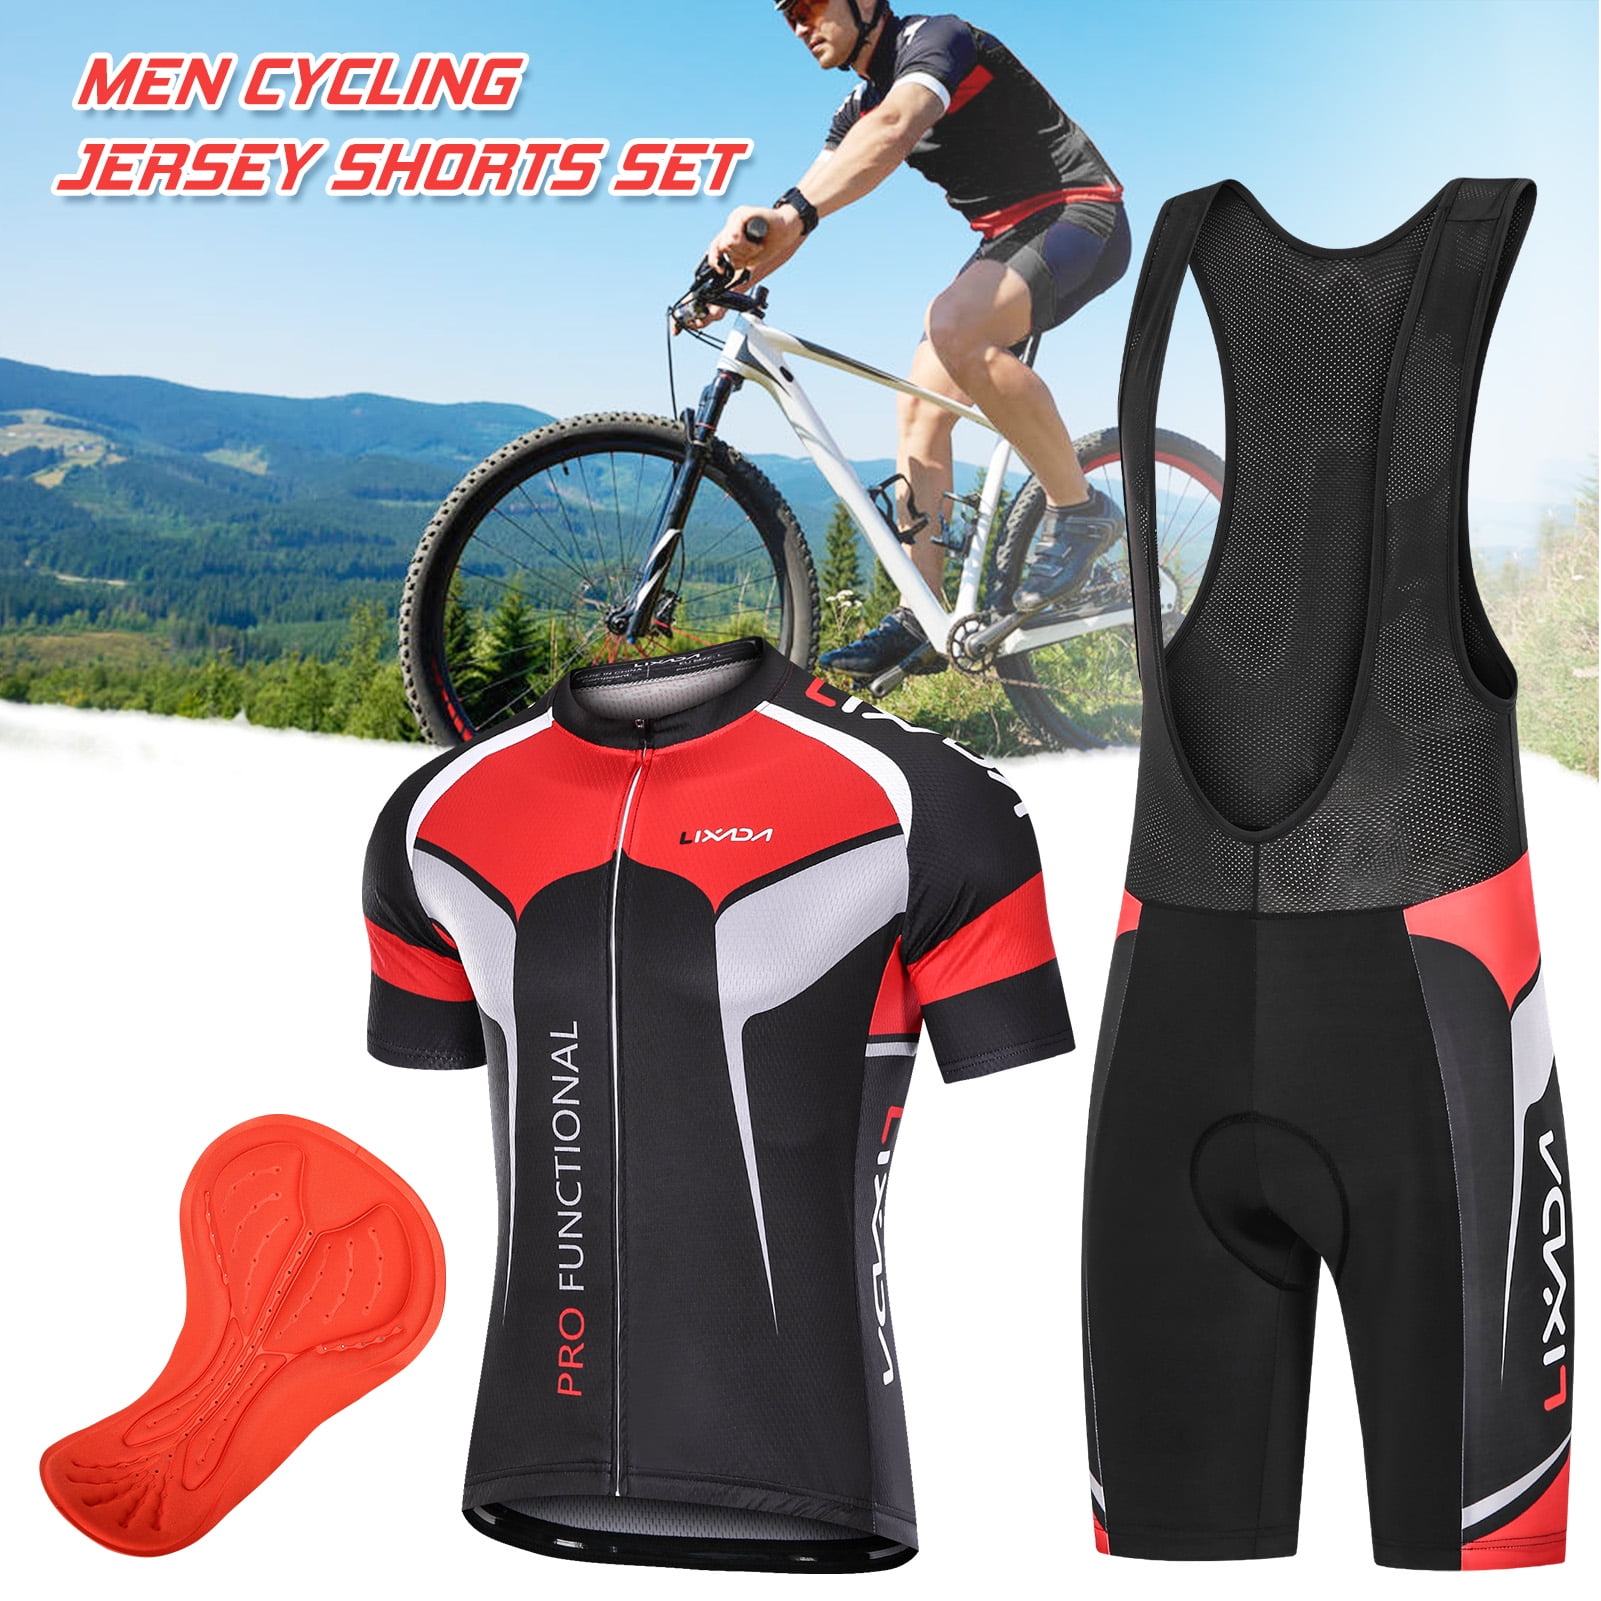 Mens Team Bike Cycling Race Short Sleeve Jersey Shorts Kits Shirt Quick Dry